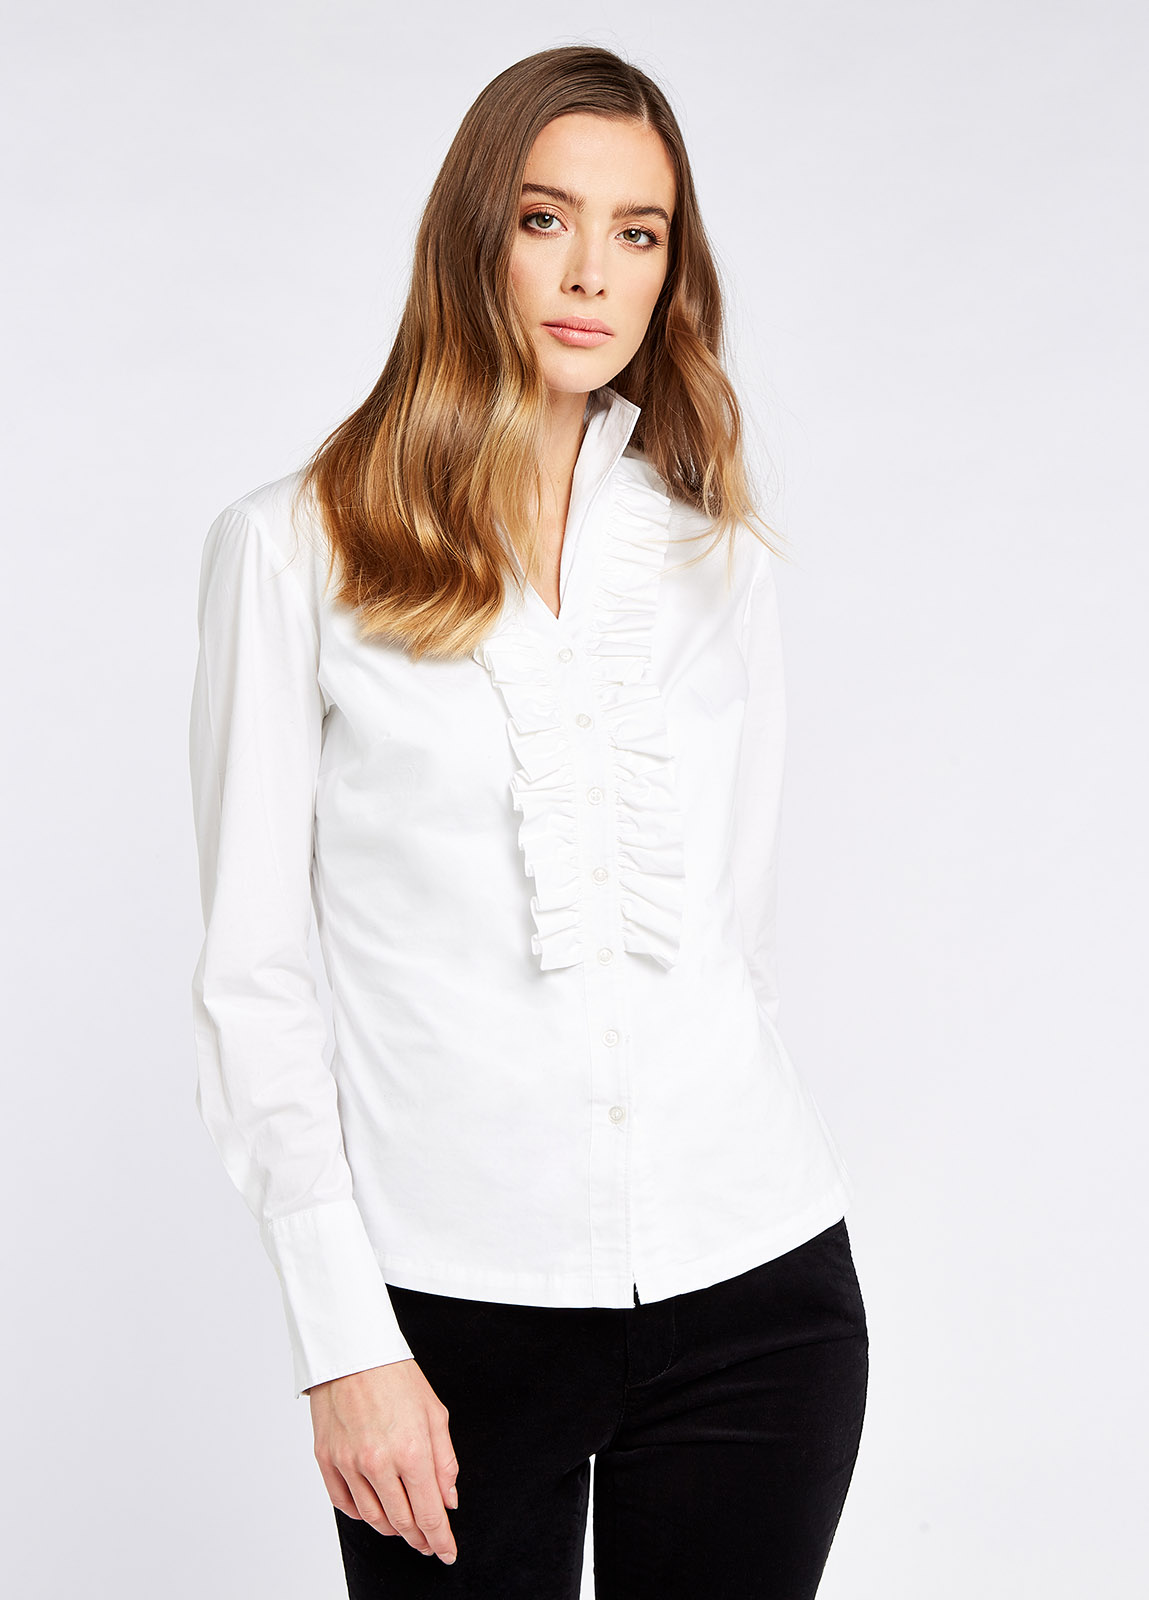 - | designed Women Dubarry of USA Shirts for Ireland Beautifully Dubarry